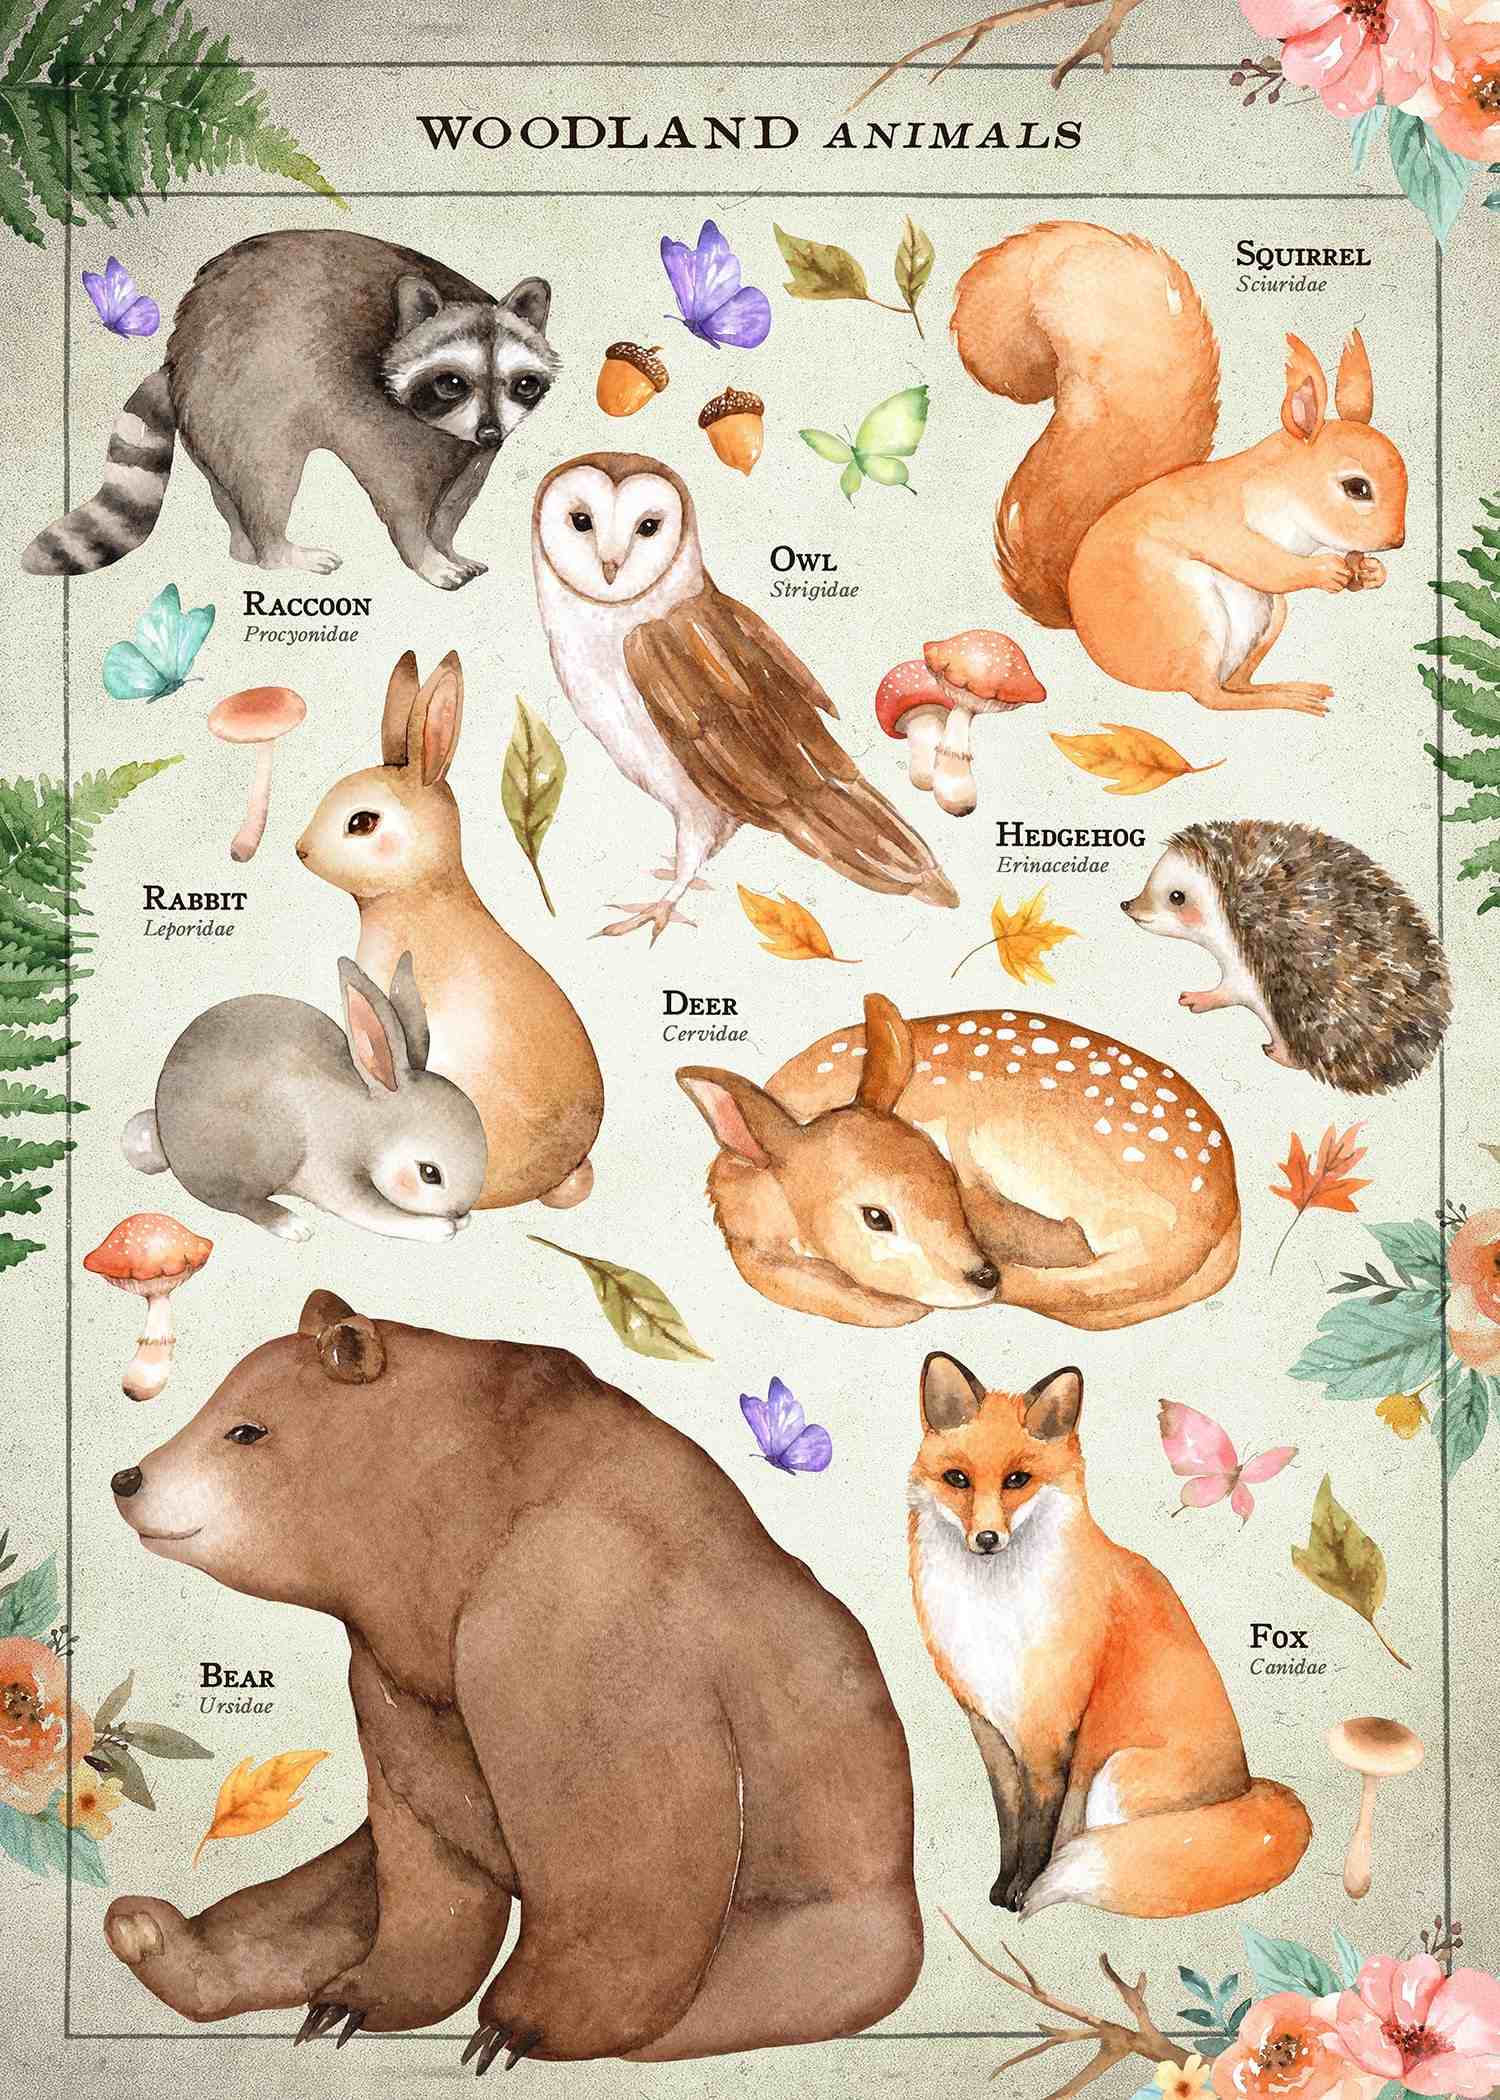 Woodland animals poster